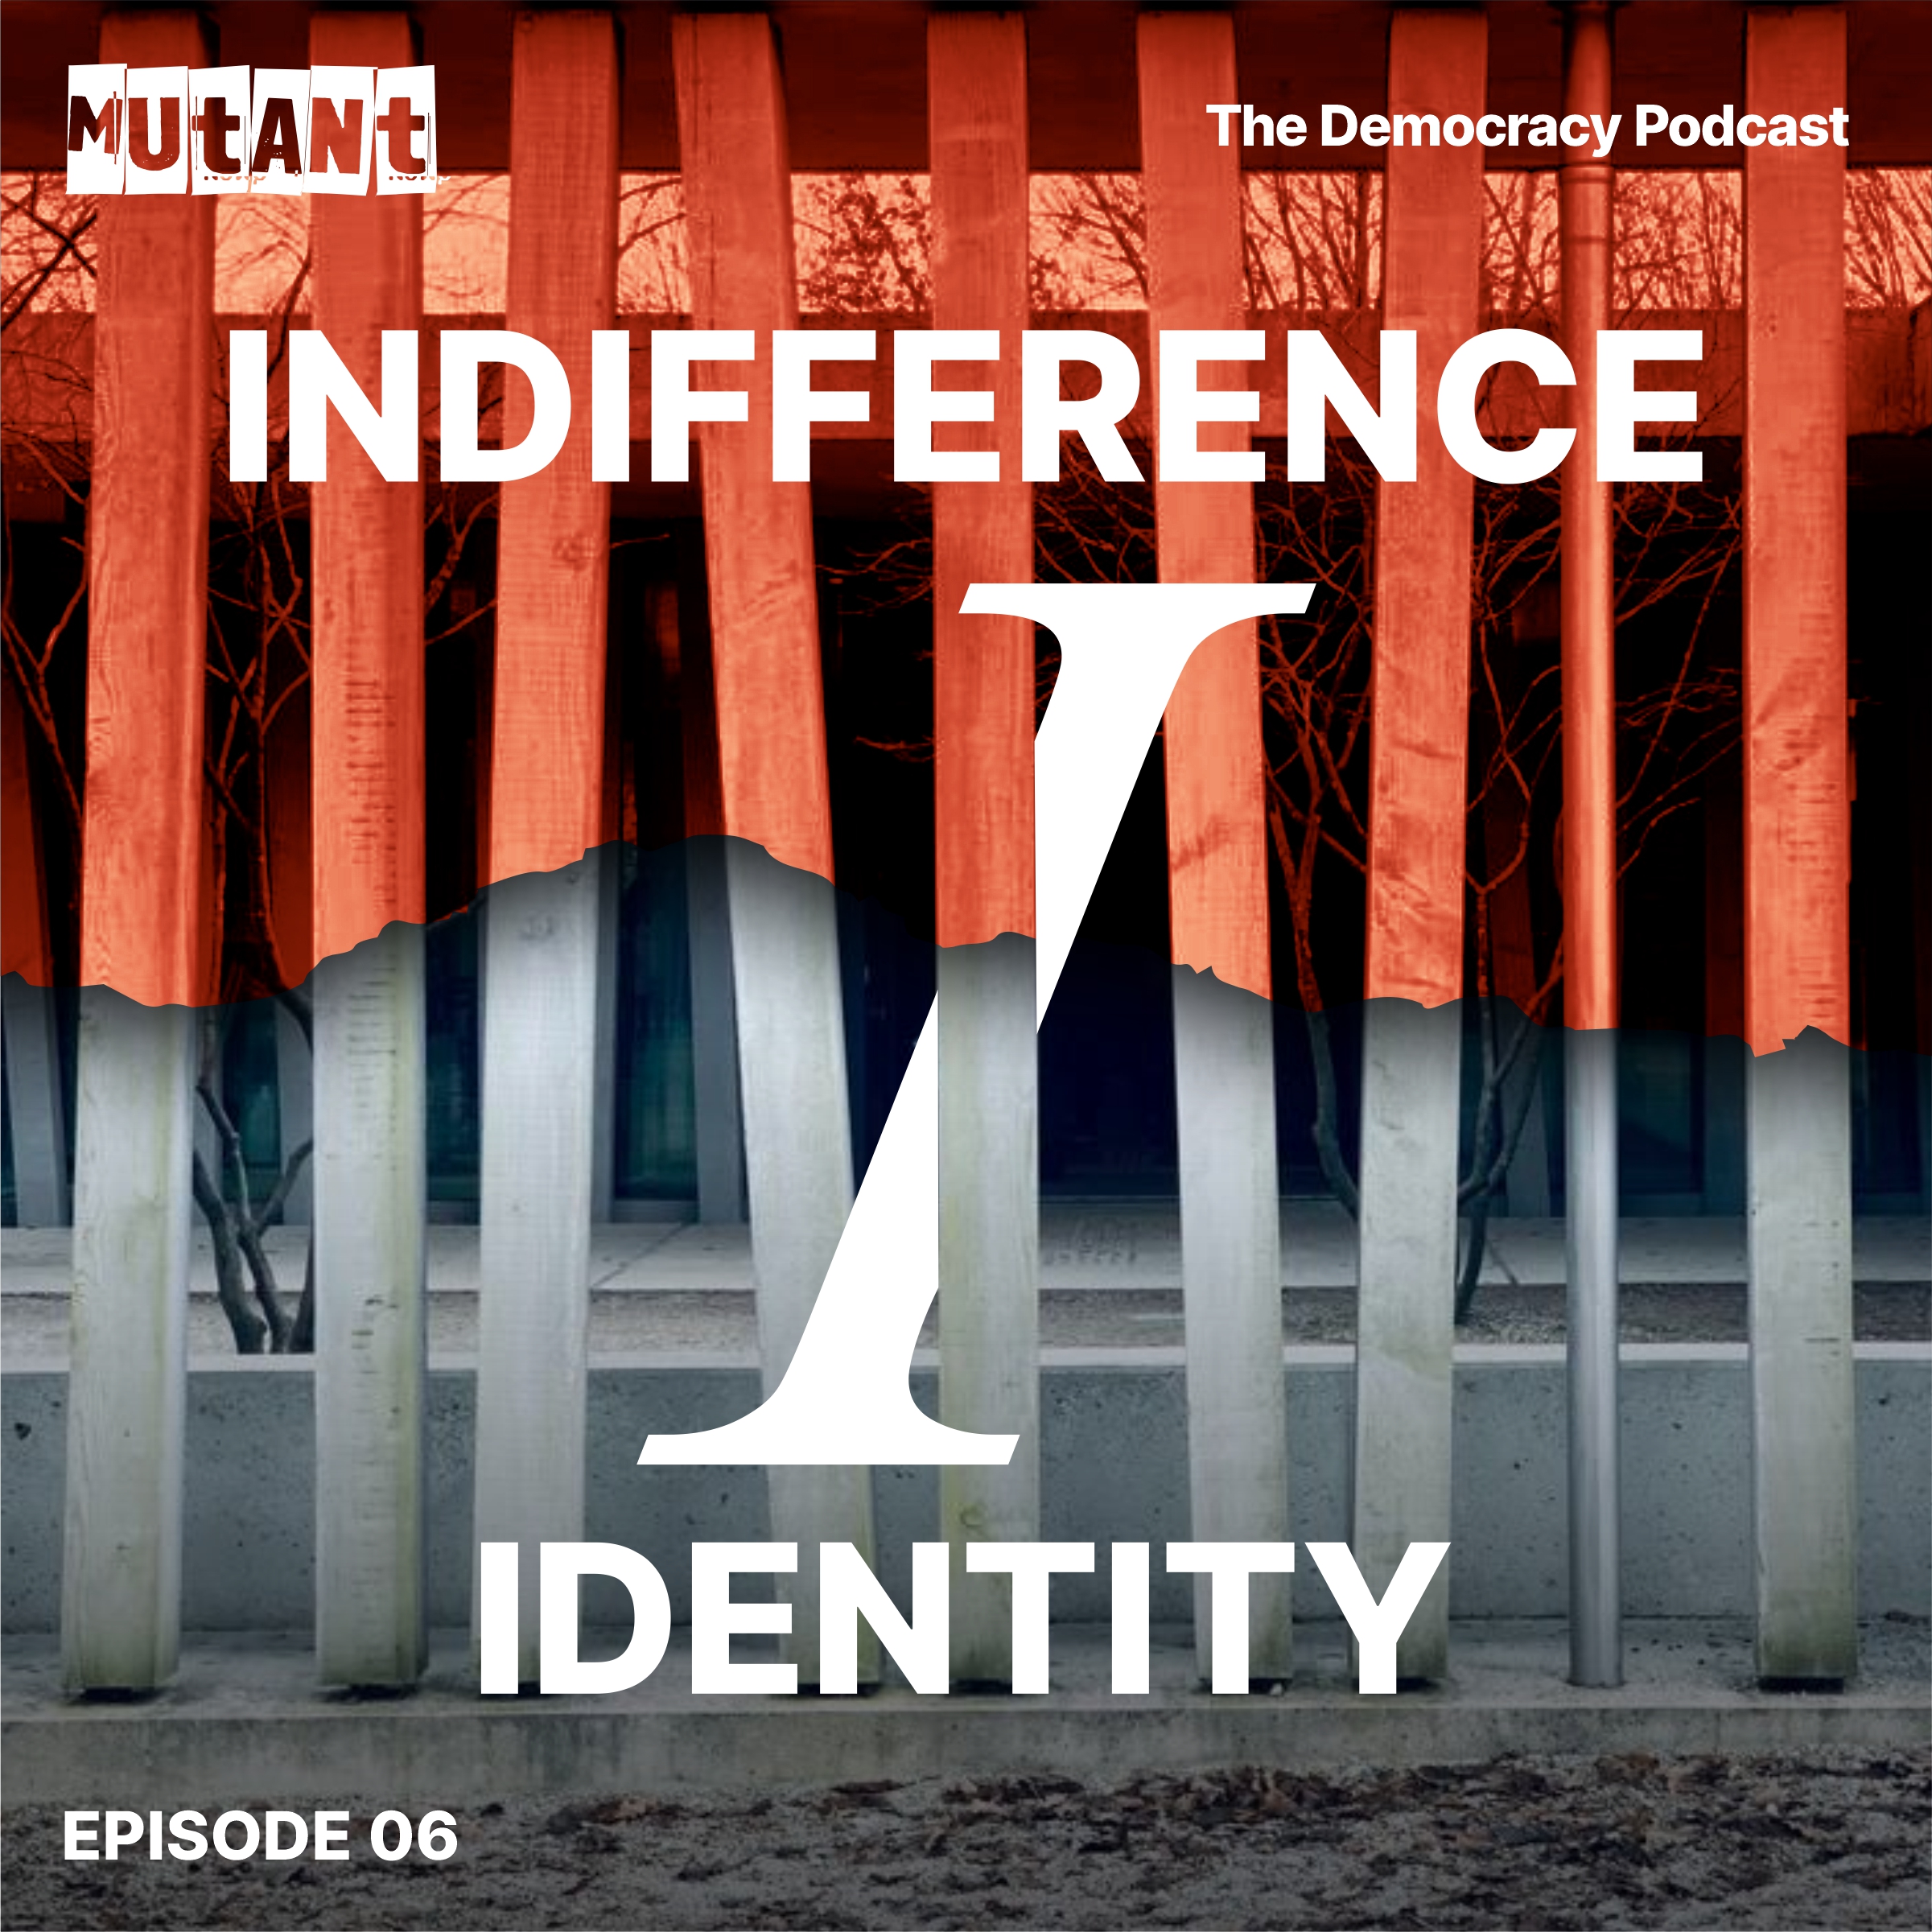 I | IDENTITY & INDIFFERENCE